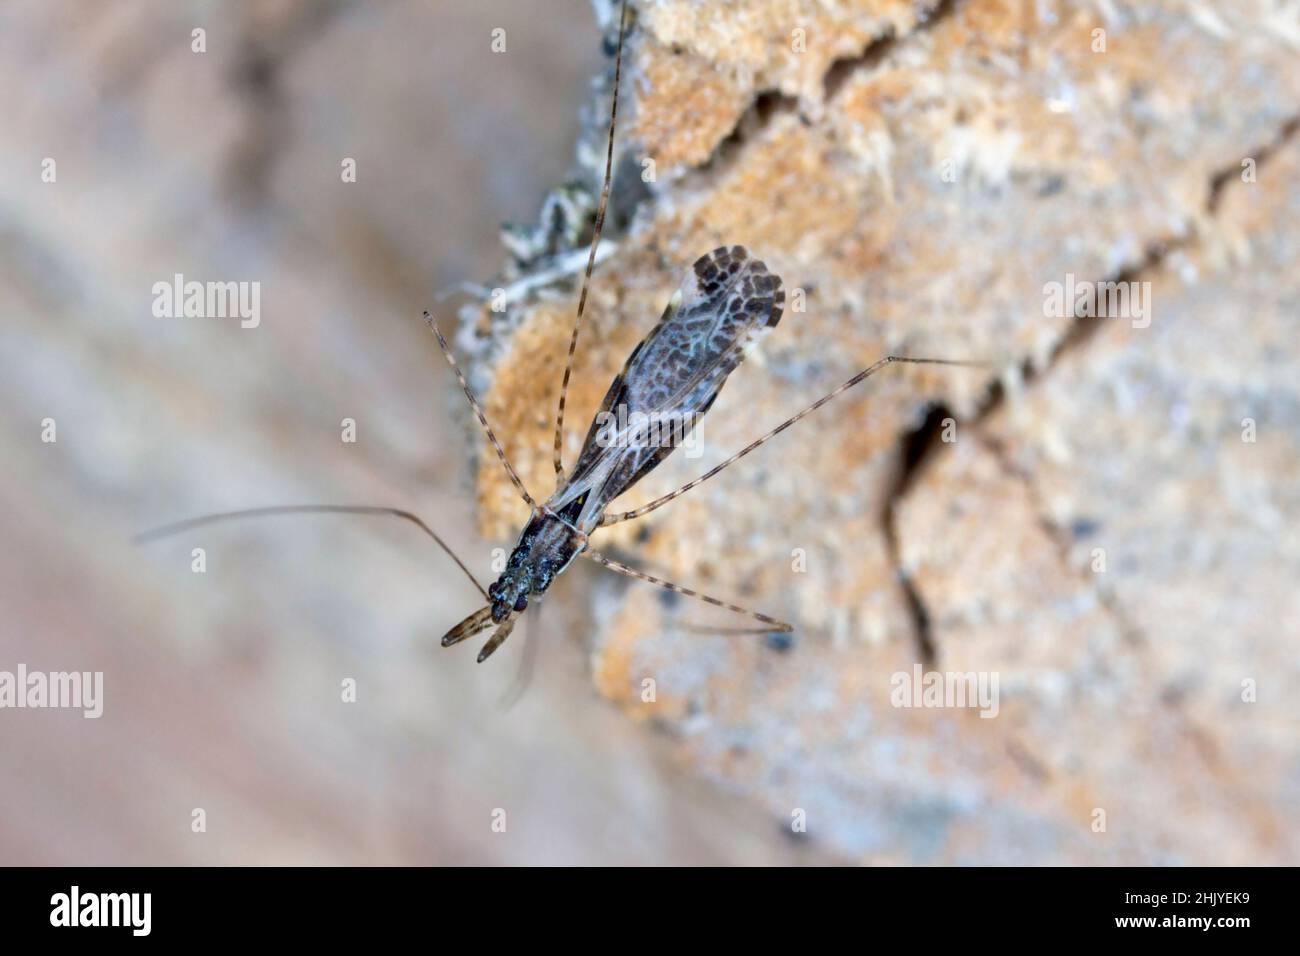 Common thread-legged assassin bug Empicoris culiciformis. Stock Photo